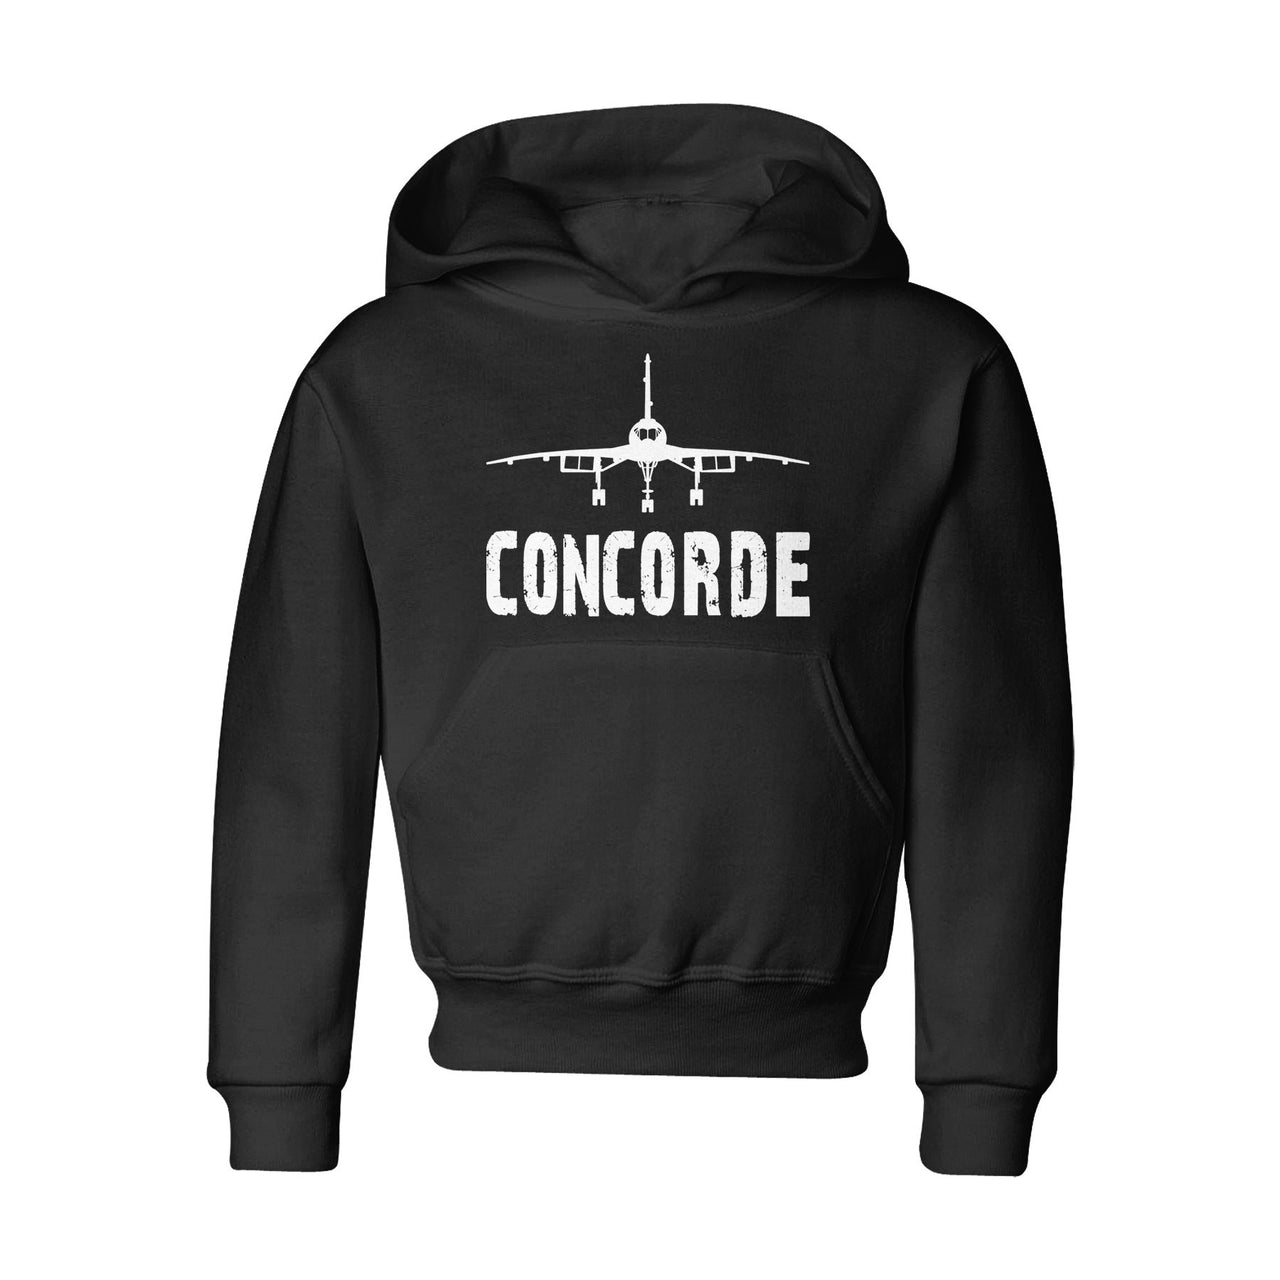 Concorde & Plane Designed "CHILDREN" Hoodies